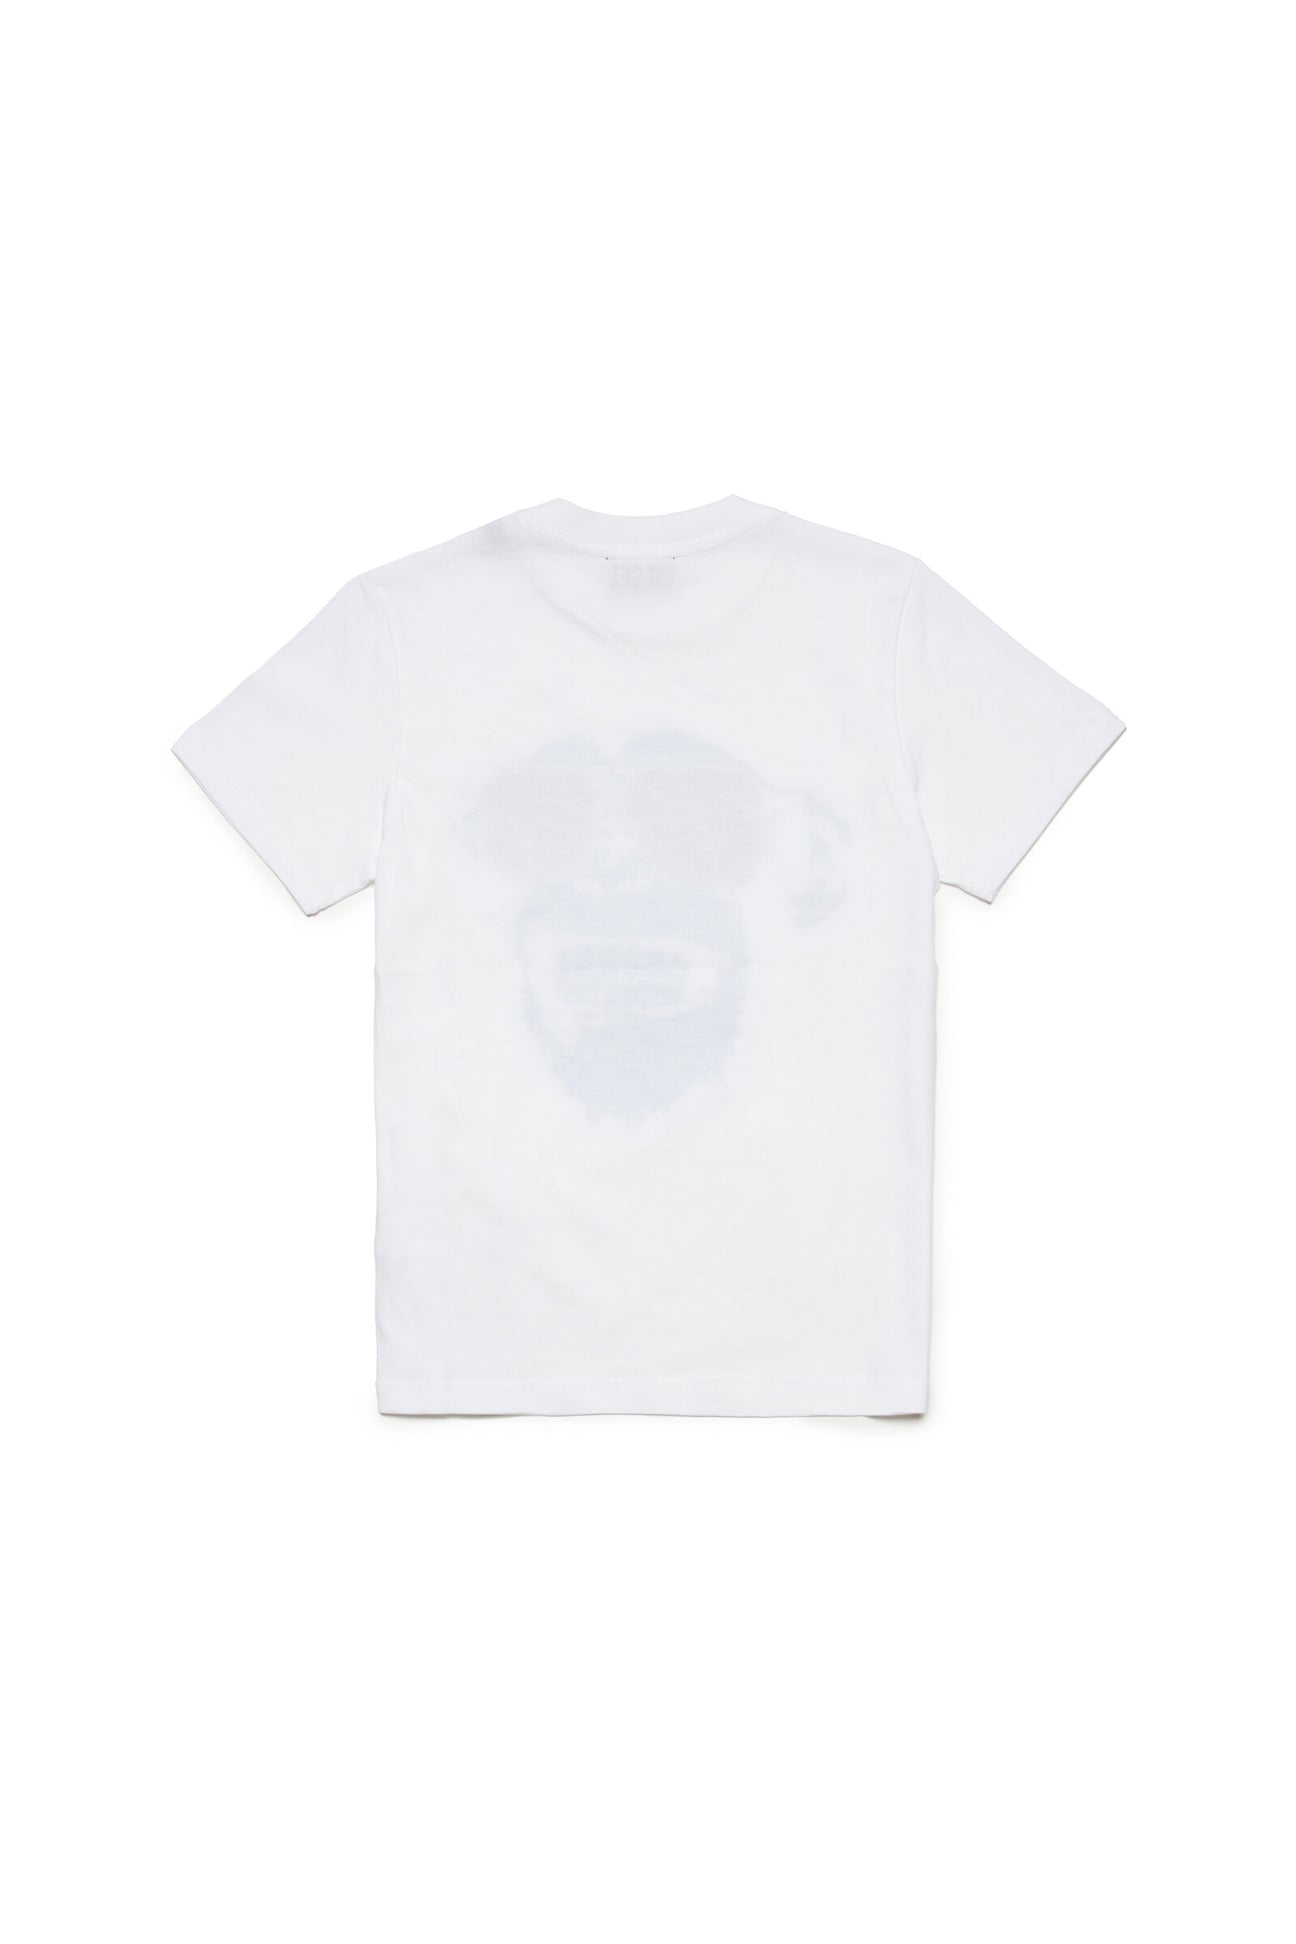 T-shirt bianca con stampa Monkey effetto metallizzato T-shirt bianca con stampa Monkey effetto metallizzato